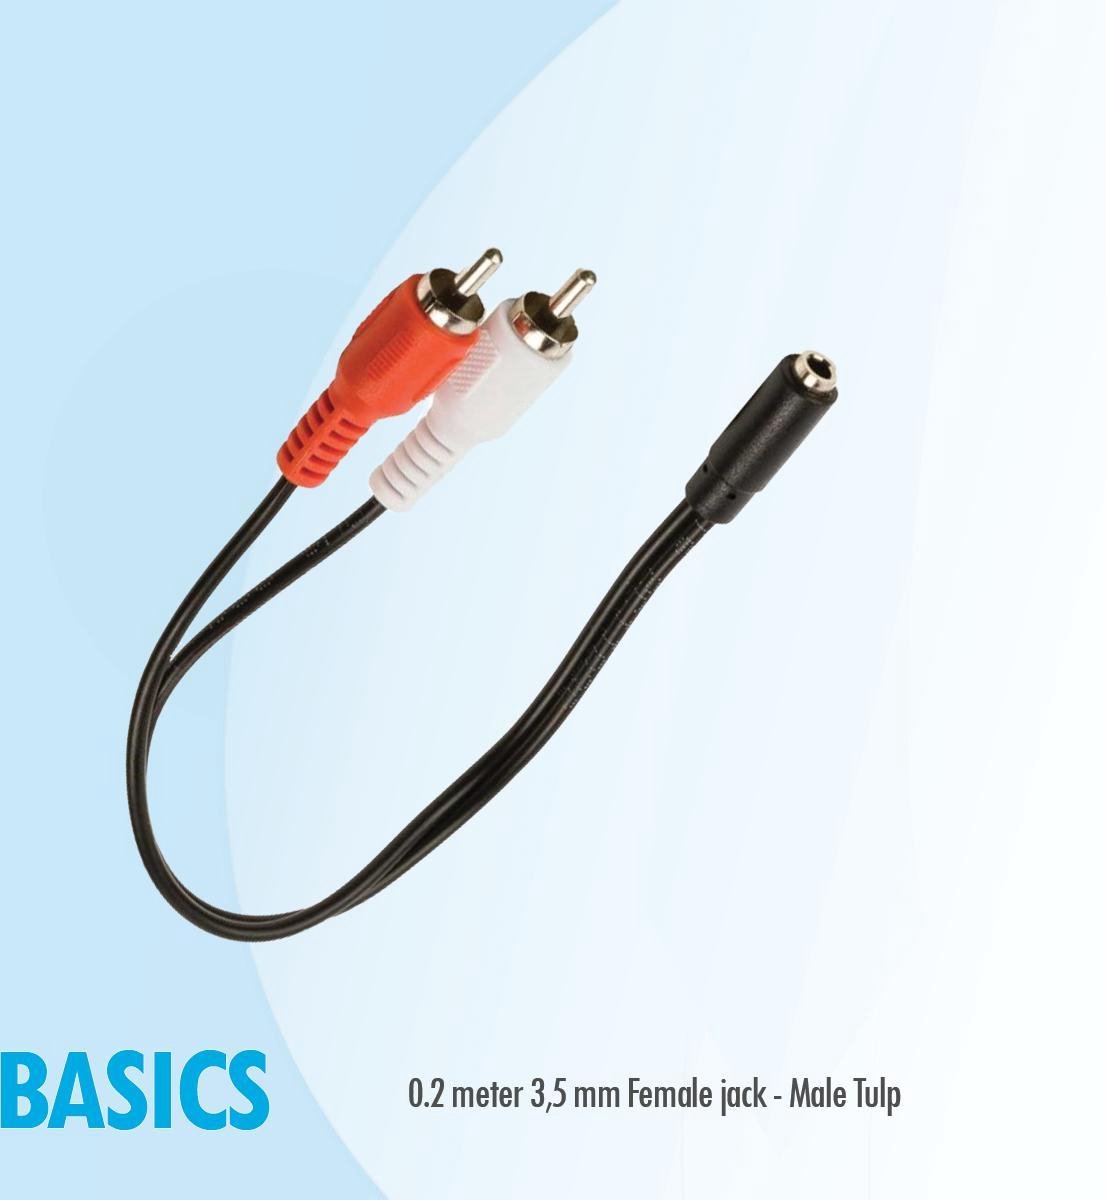 Basics 0,2 mtr 3,5 mm Female jack -  Male Tulp /RCA aux audio kabel - Bertje Budget